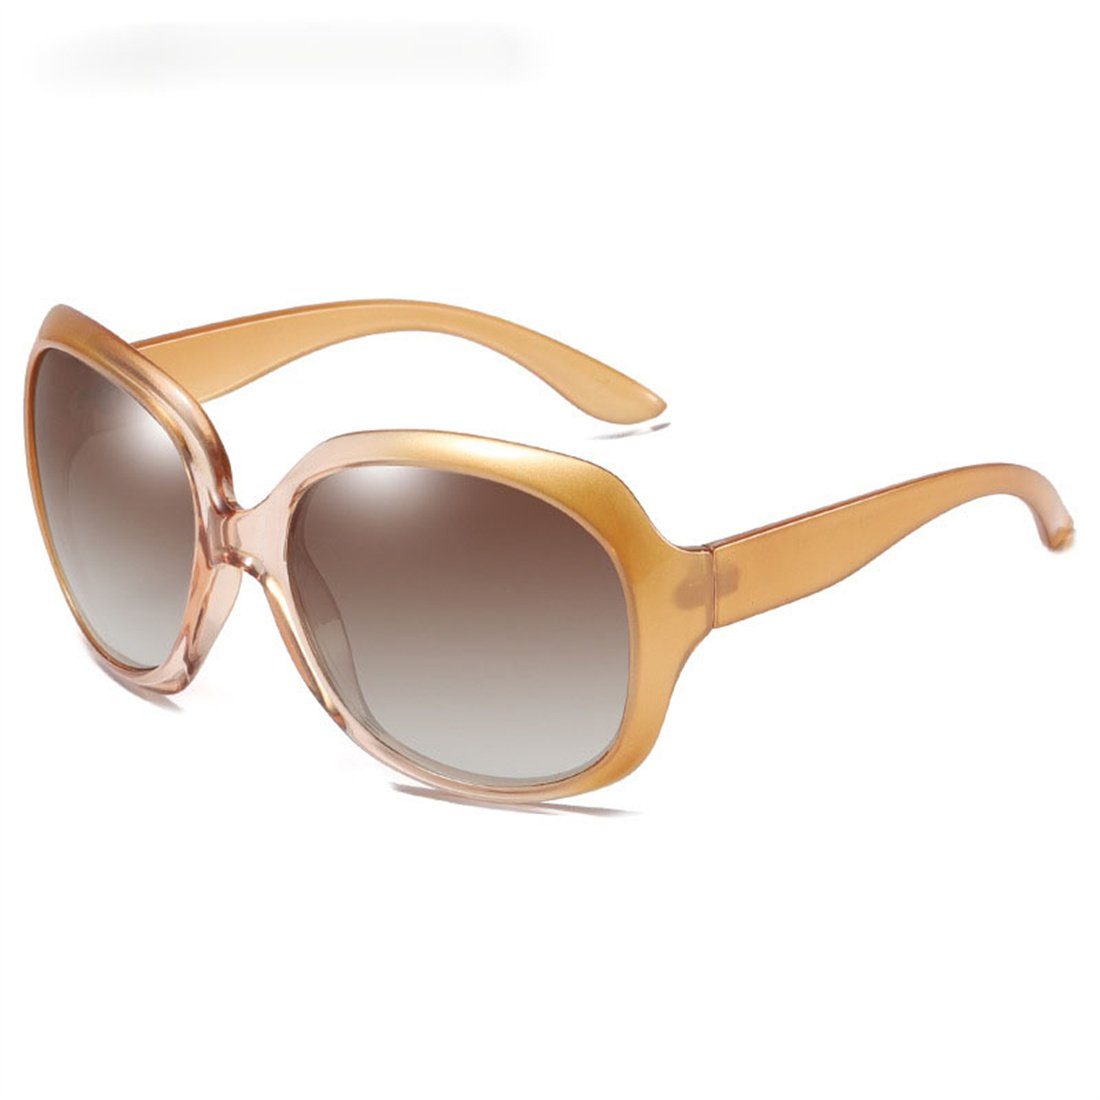 DÖRÖY Sonnenbrille Damenmode Polarisierte Sonnenbrille, Outdoor Vollrahmen-Sonnenbrille